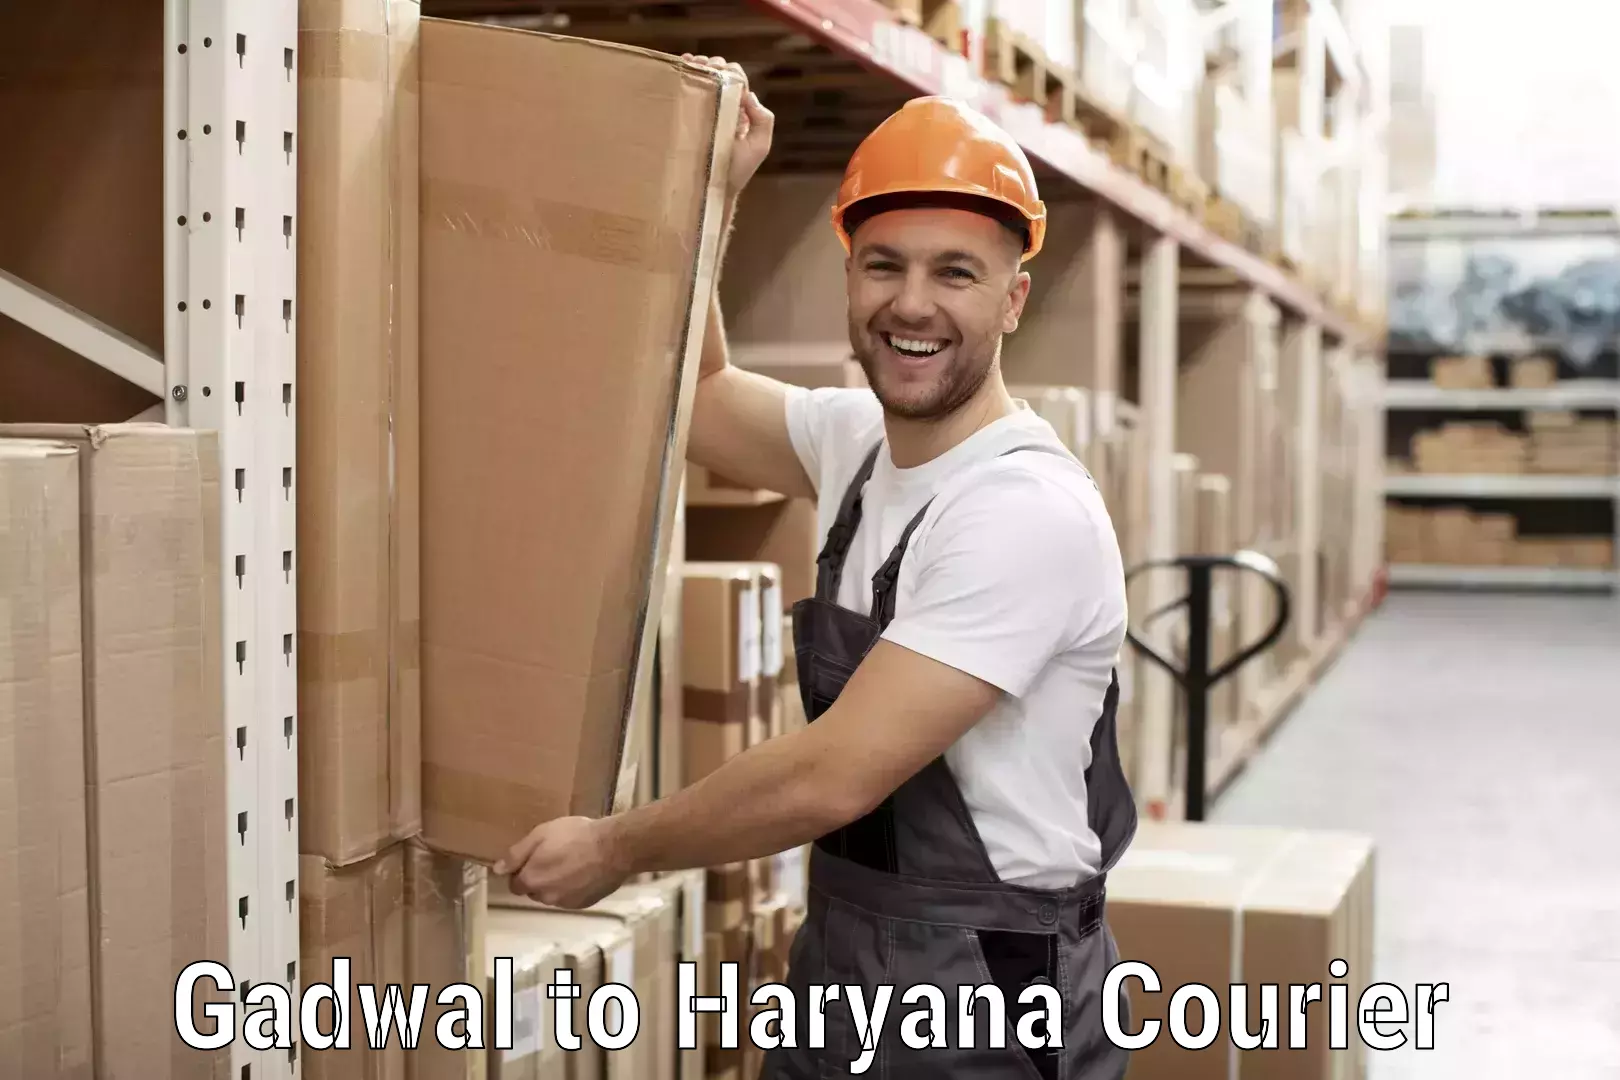 Digital courier platforms Gadwal to Haryana